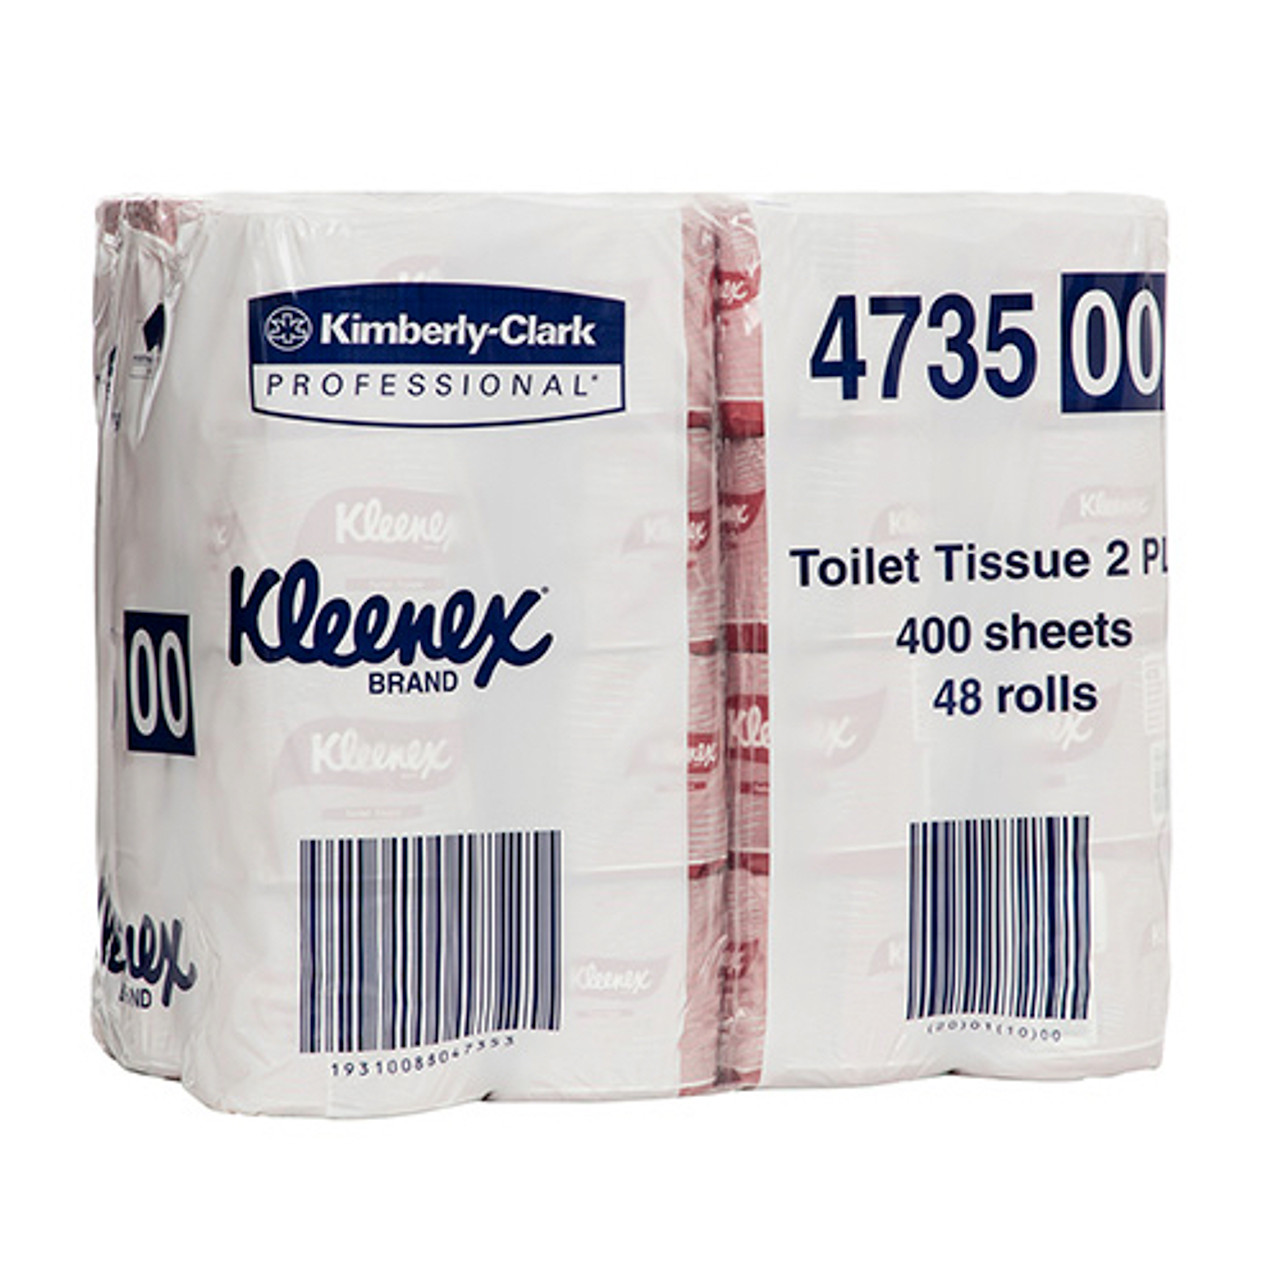 Kleenex Deluxe Toilet Tissue 2 Ply 48 Rolls x 400 Sheets (4735)